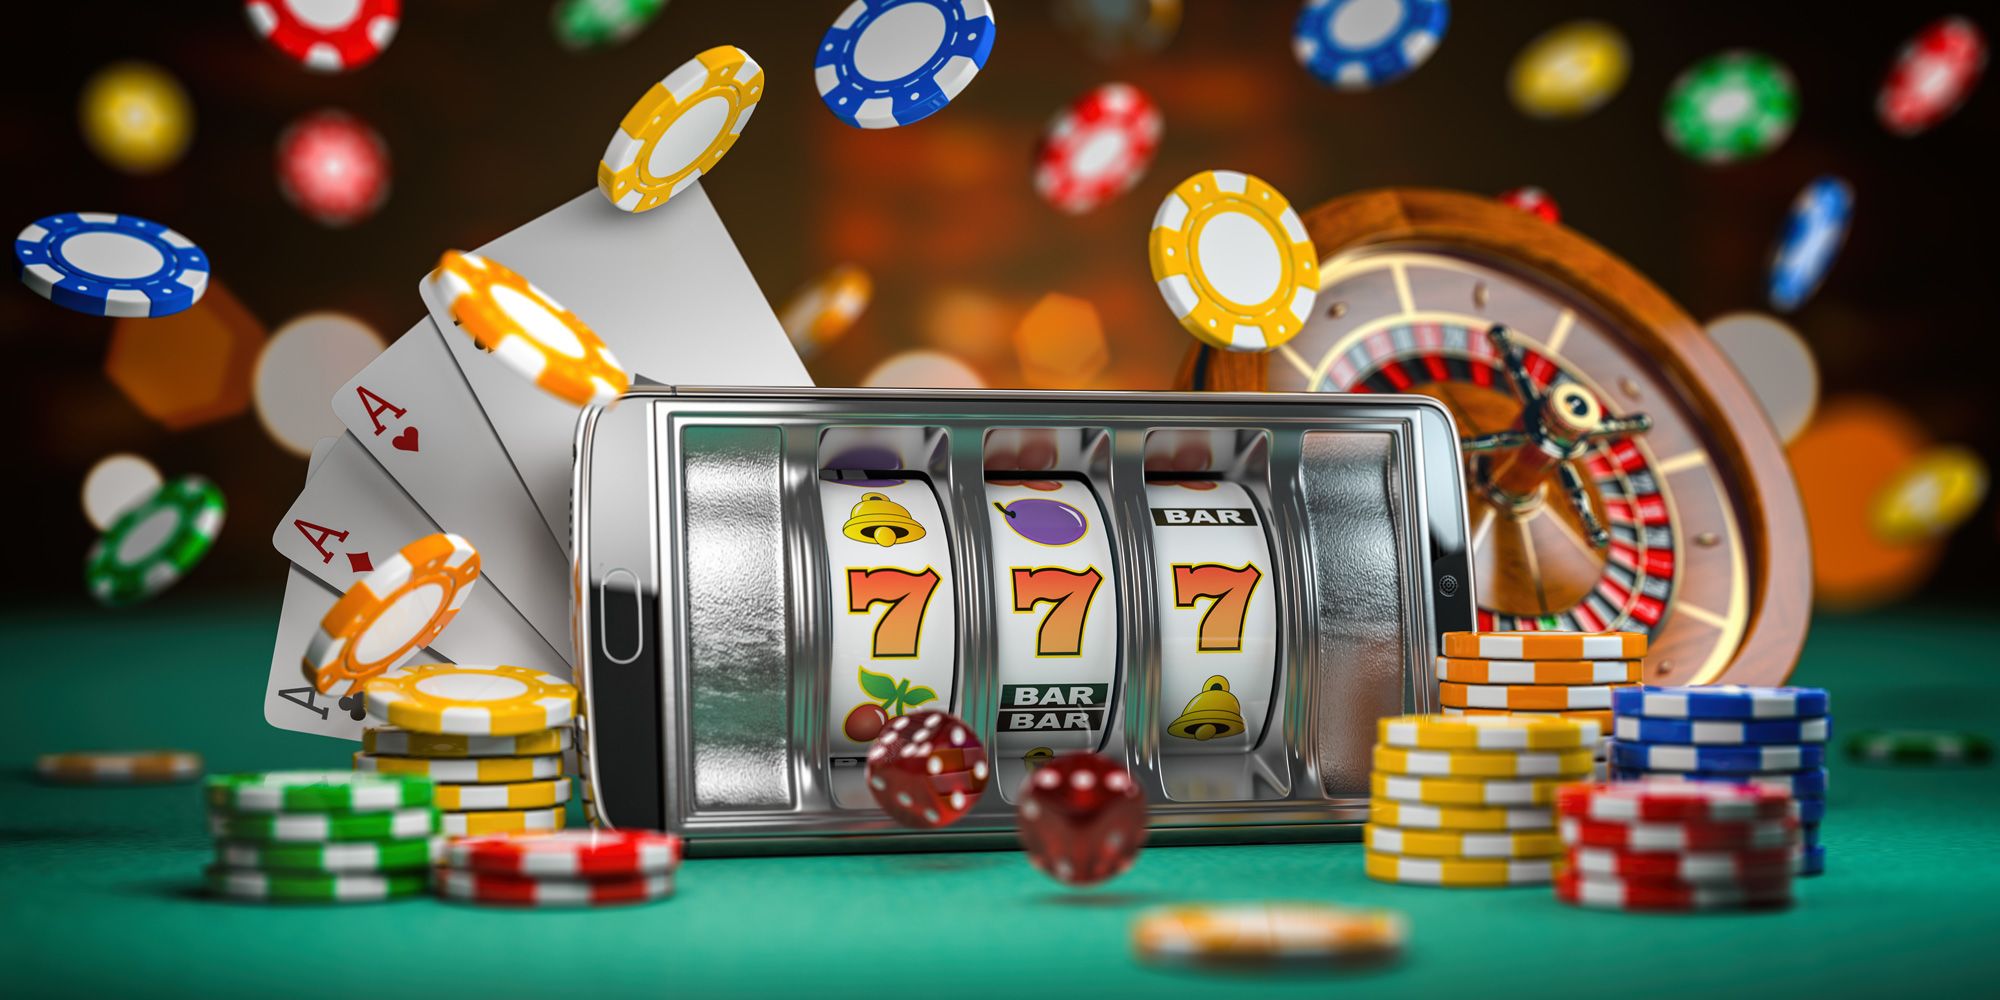 ole777 casino